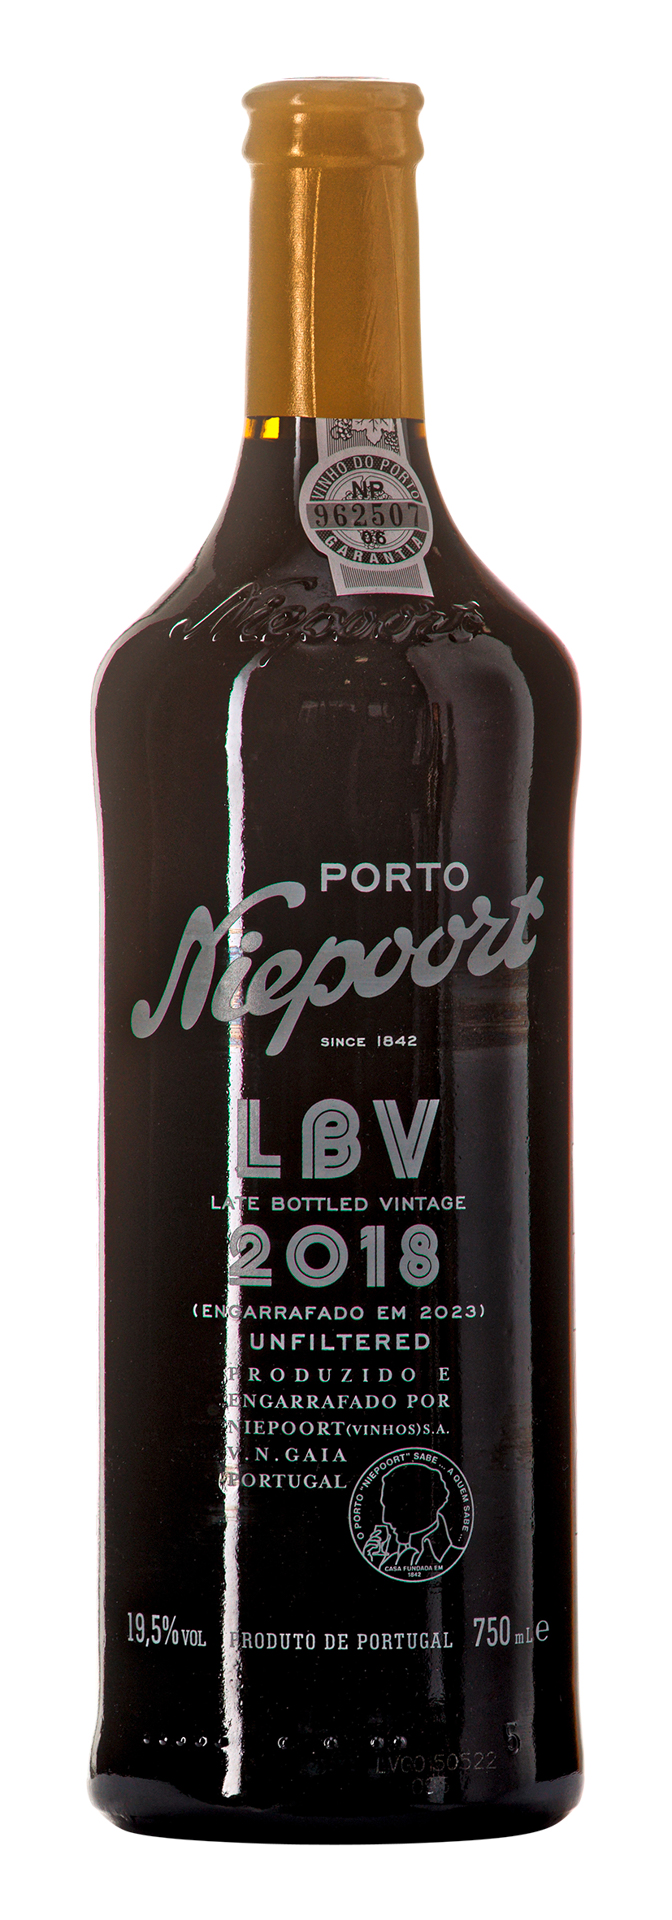 Lbv Porto 2018